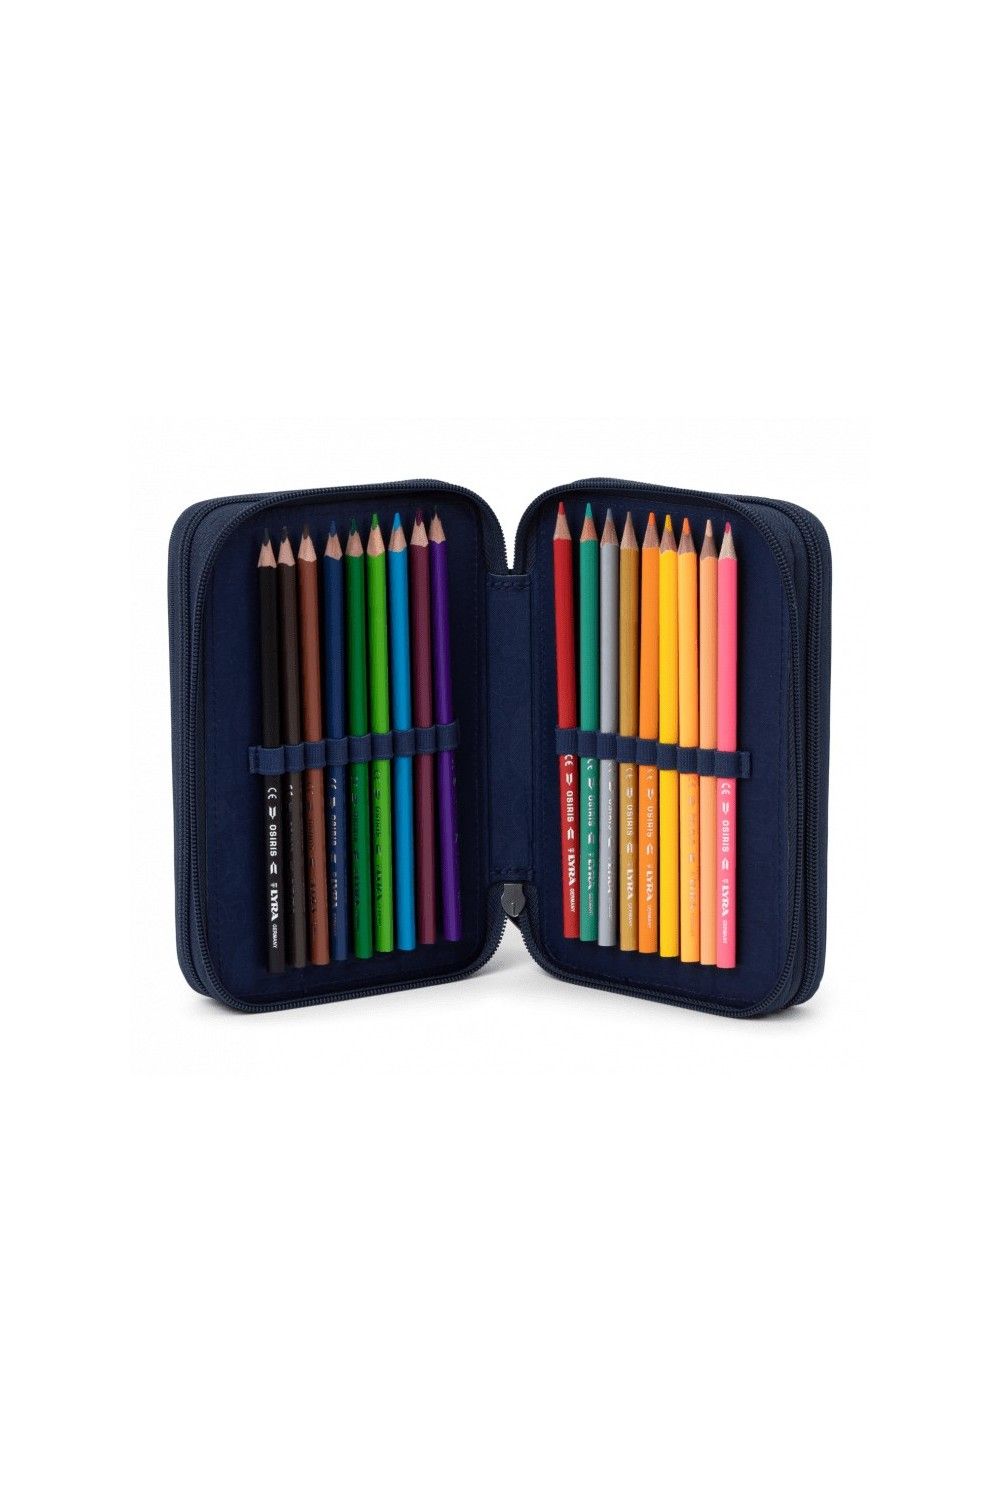 Ergobag maxi pencil case Bärtastisch